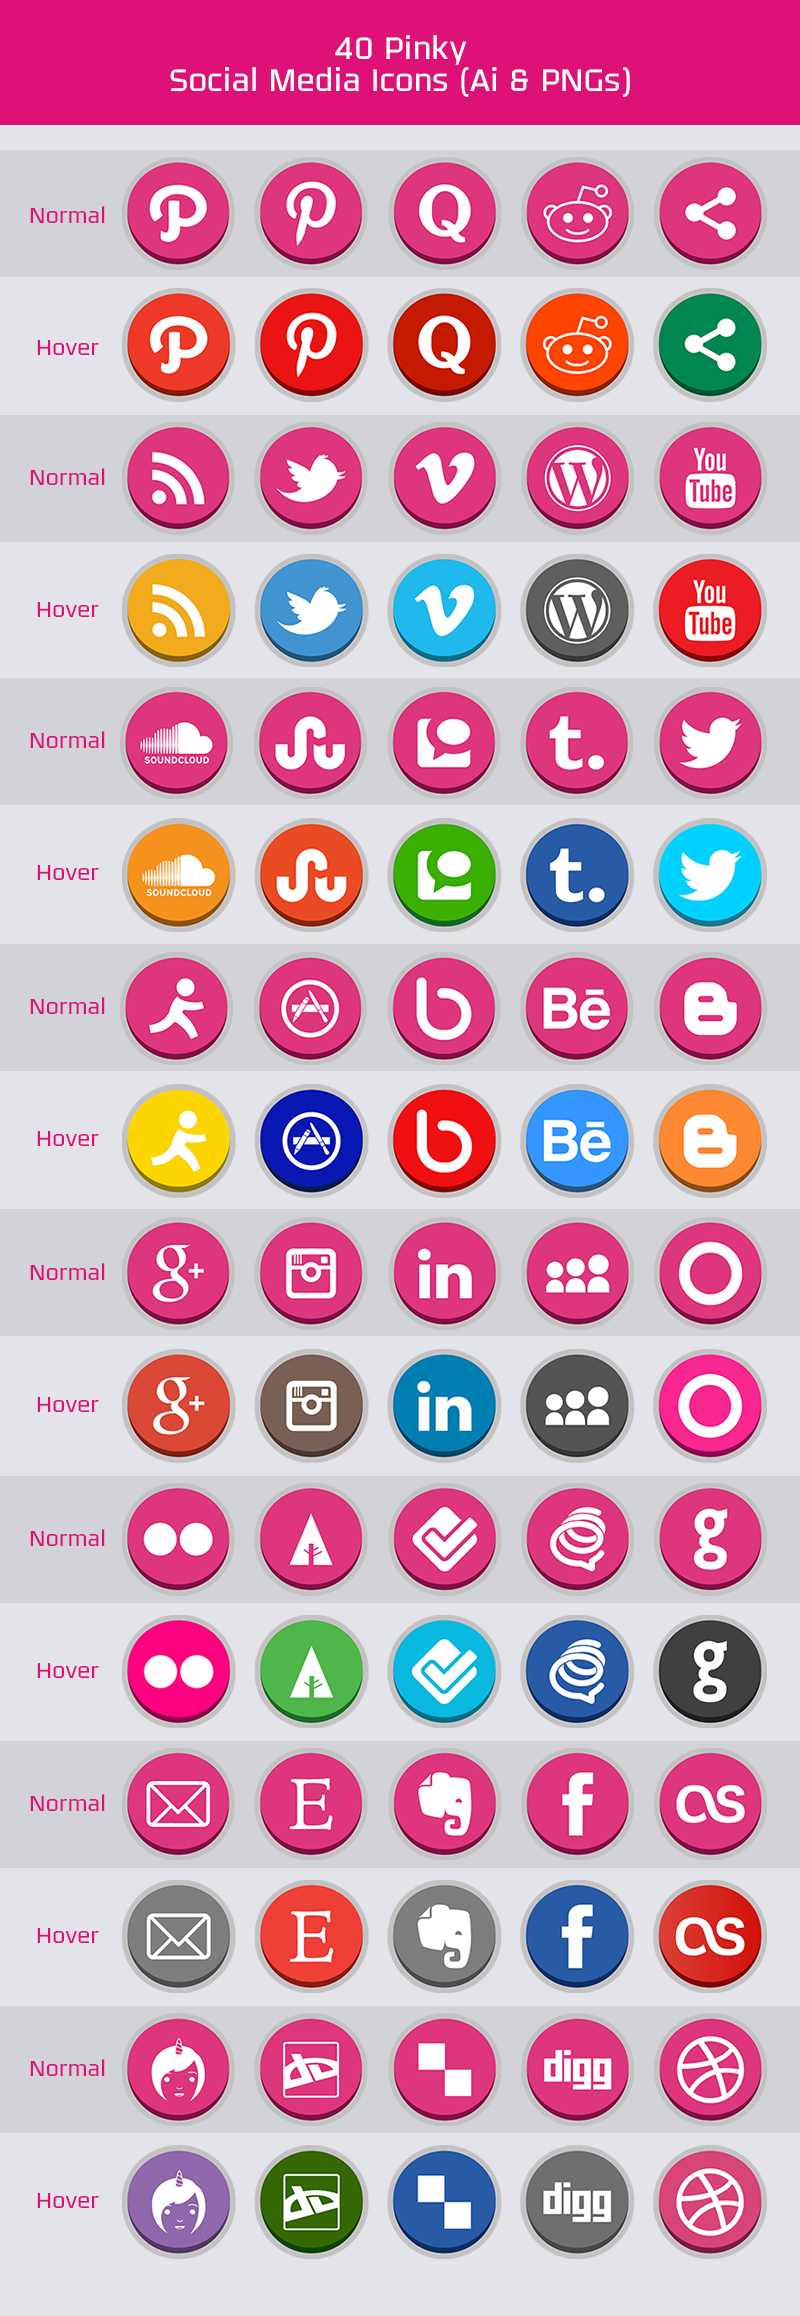 pinki social media icons